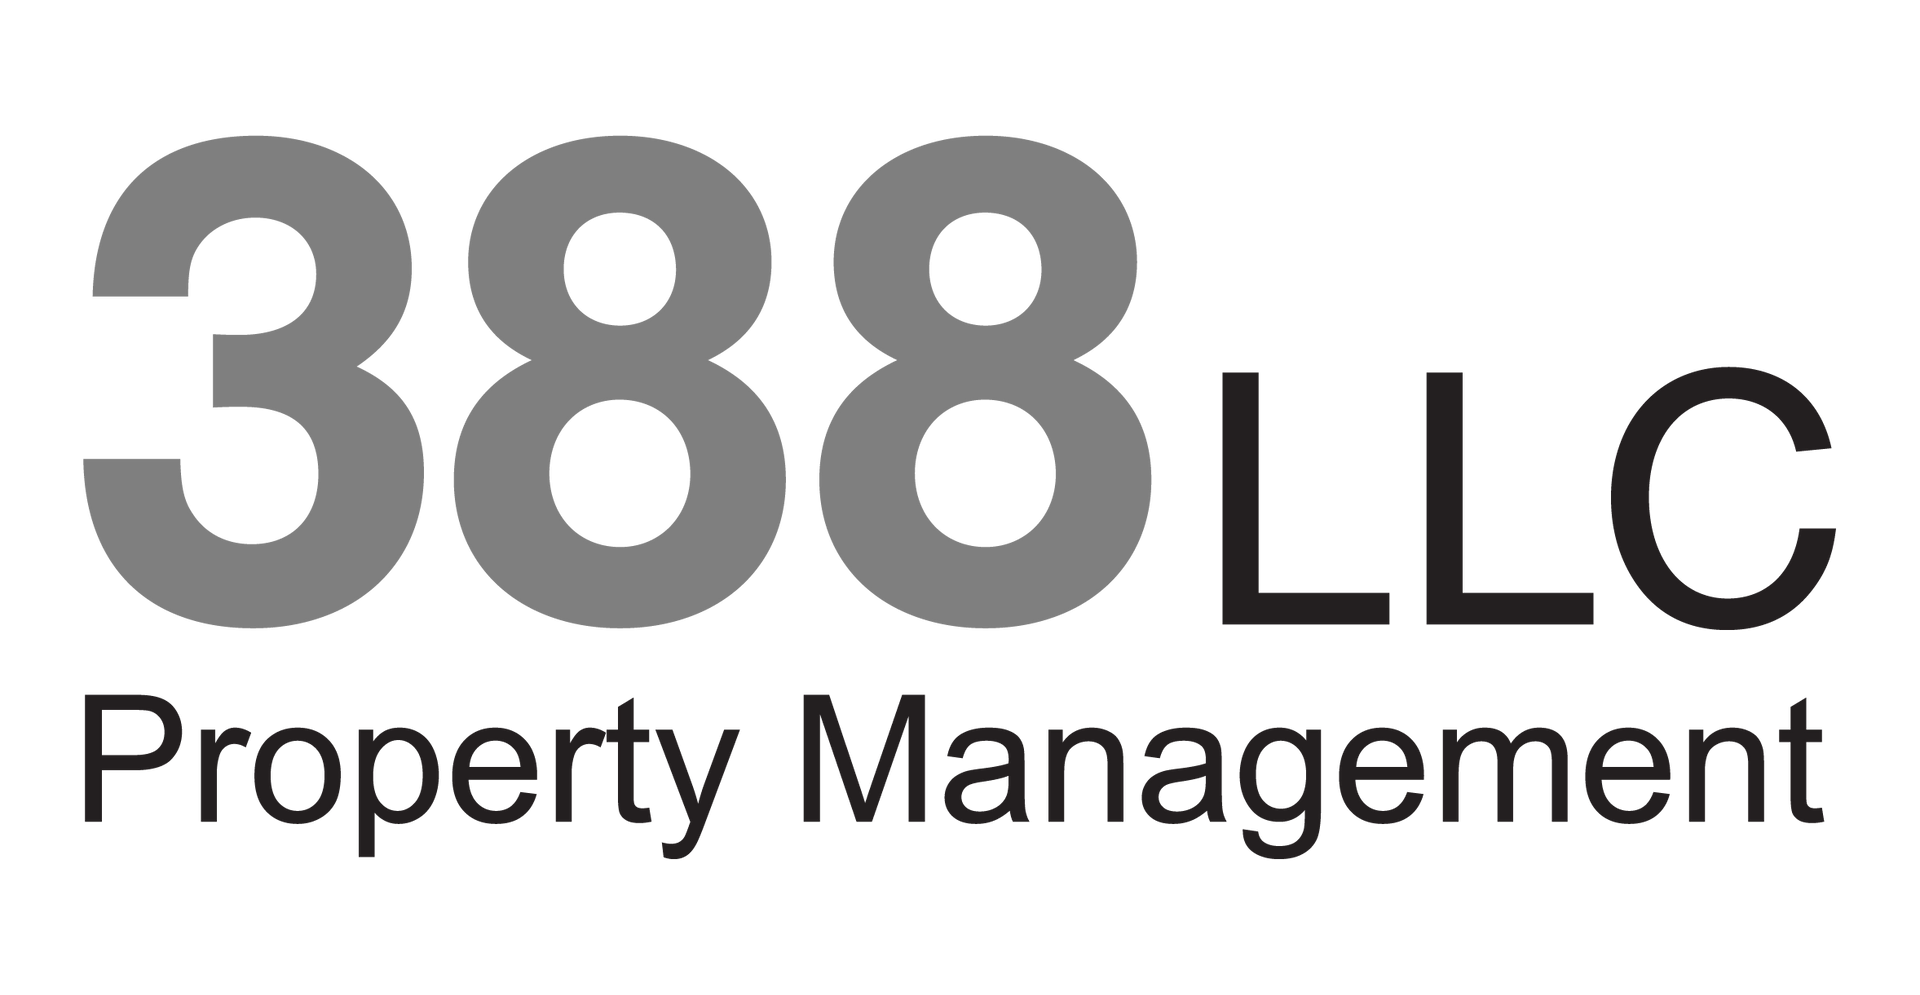 388 LLC Property Management logo